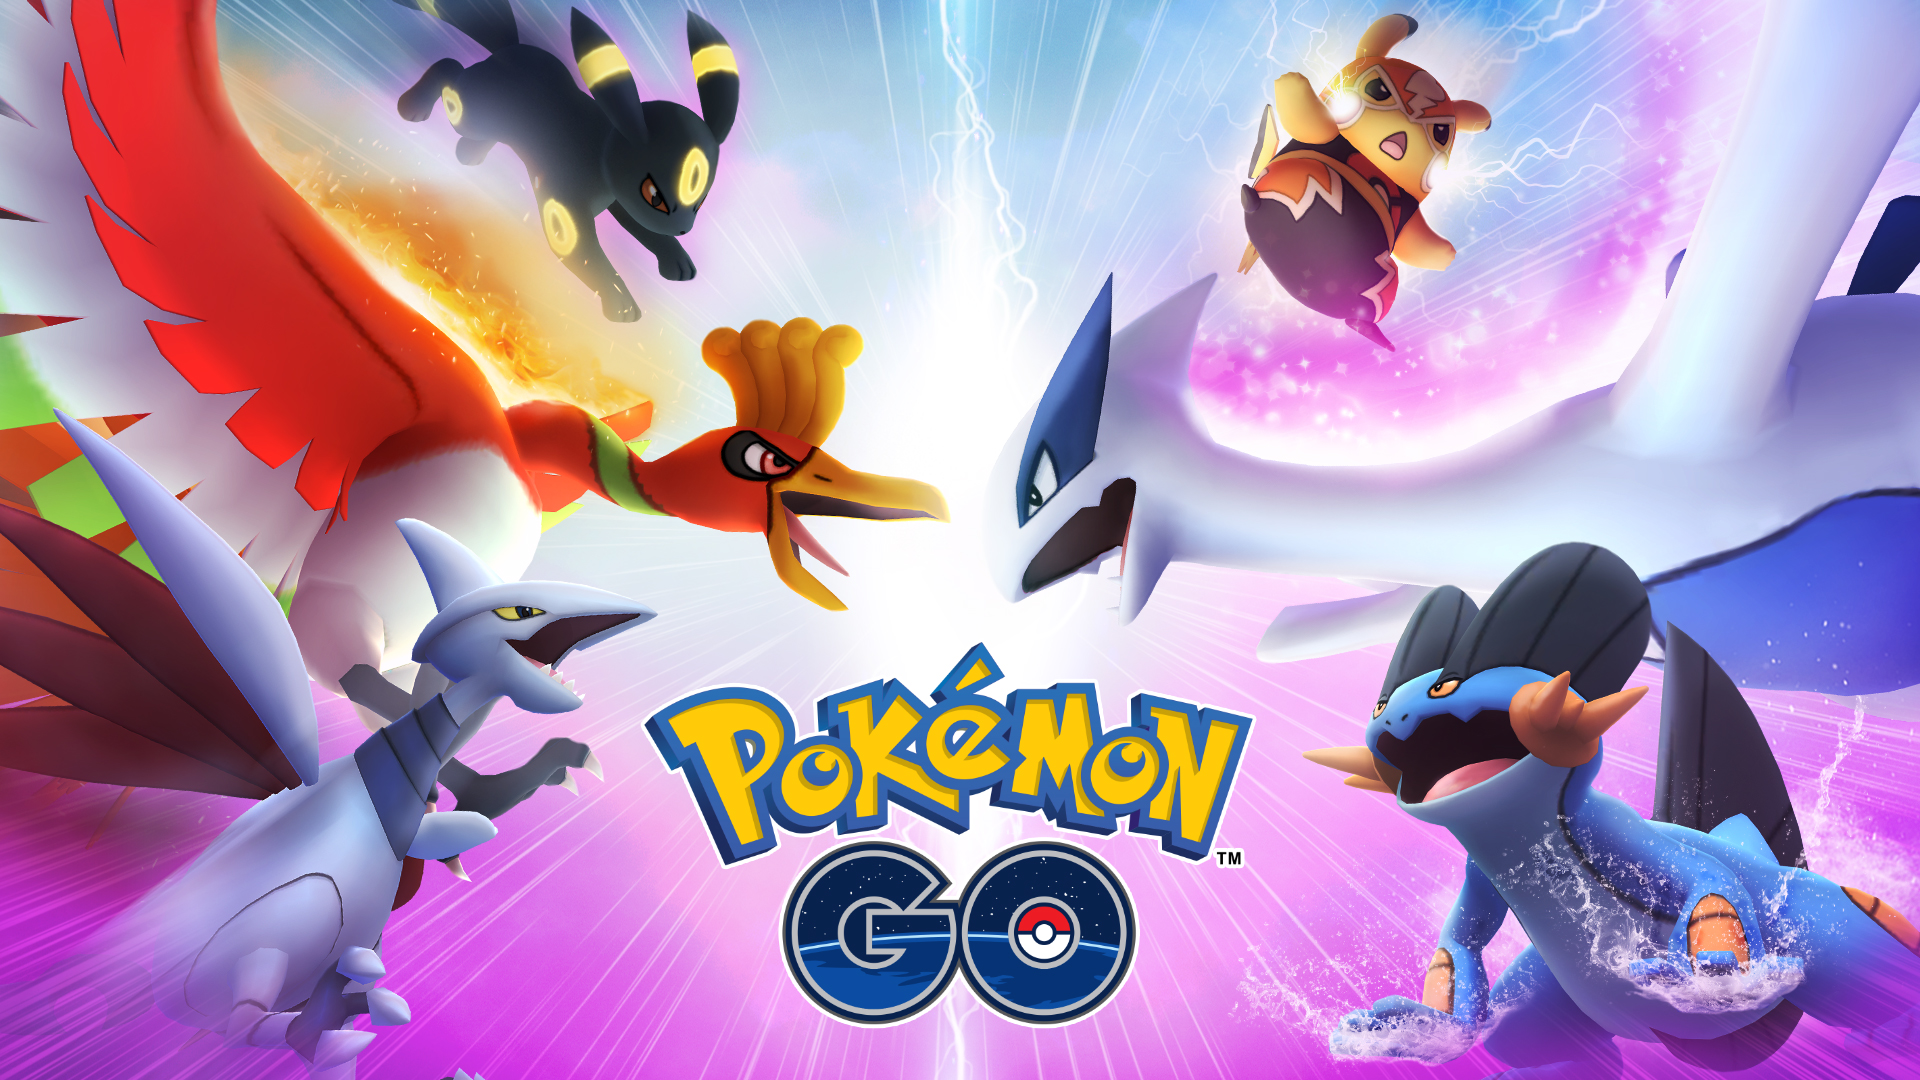 Pokémon Go updates: all the news and rumors | TechRadar